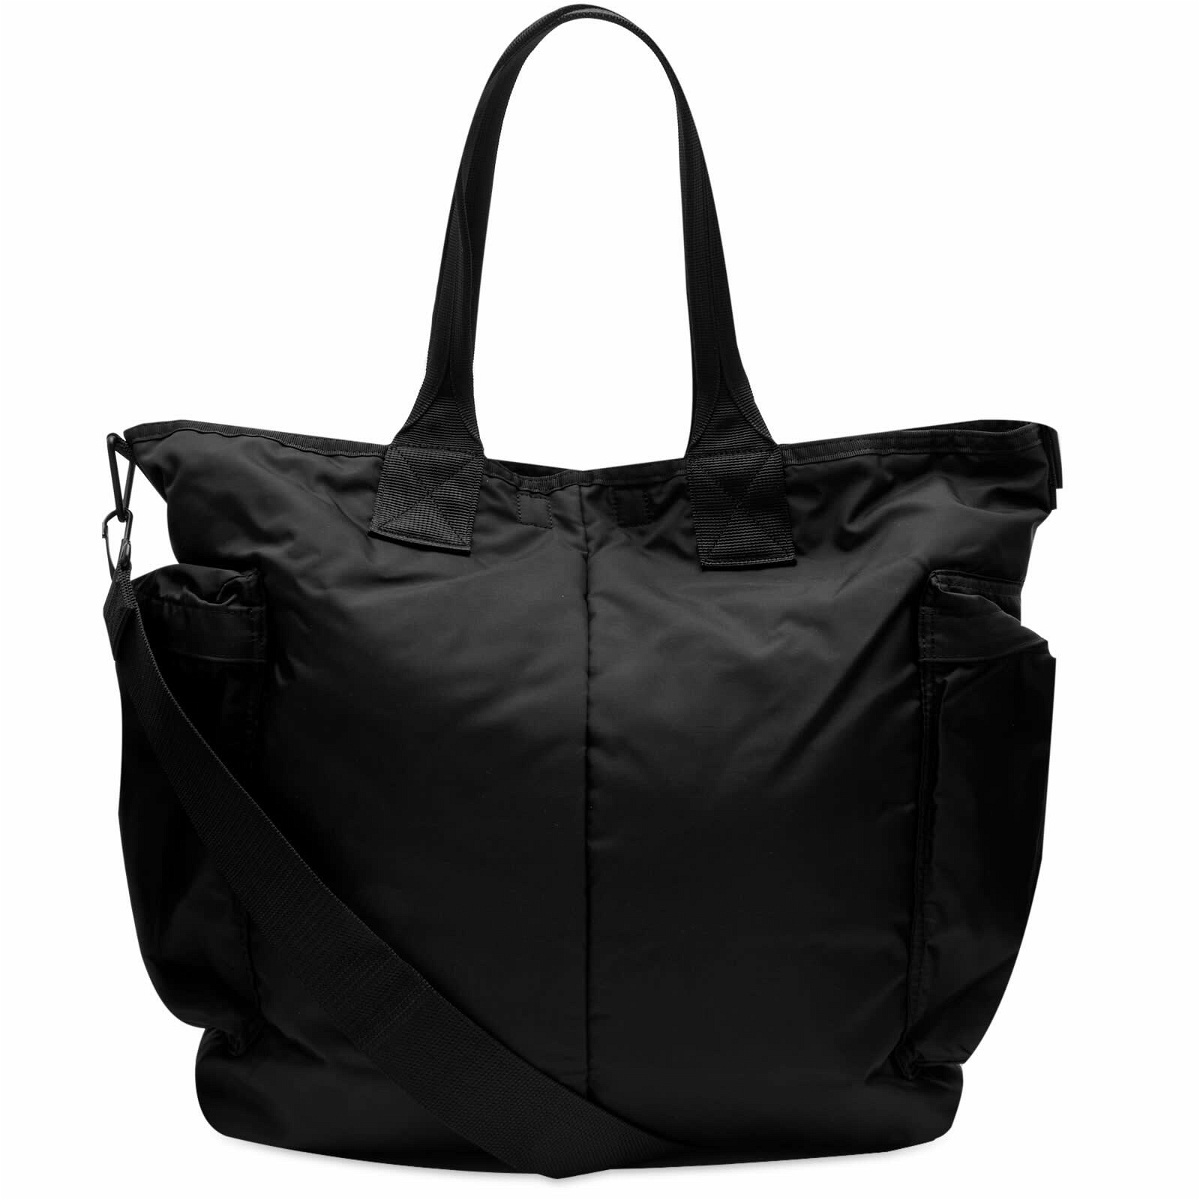 Porter-Yoshida & Co. Force 2-Way Tote Bag in Black Porter-Yoshida & Co.